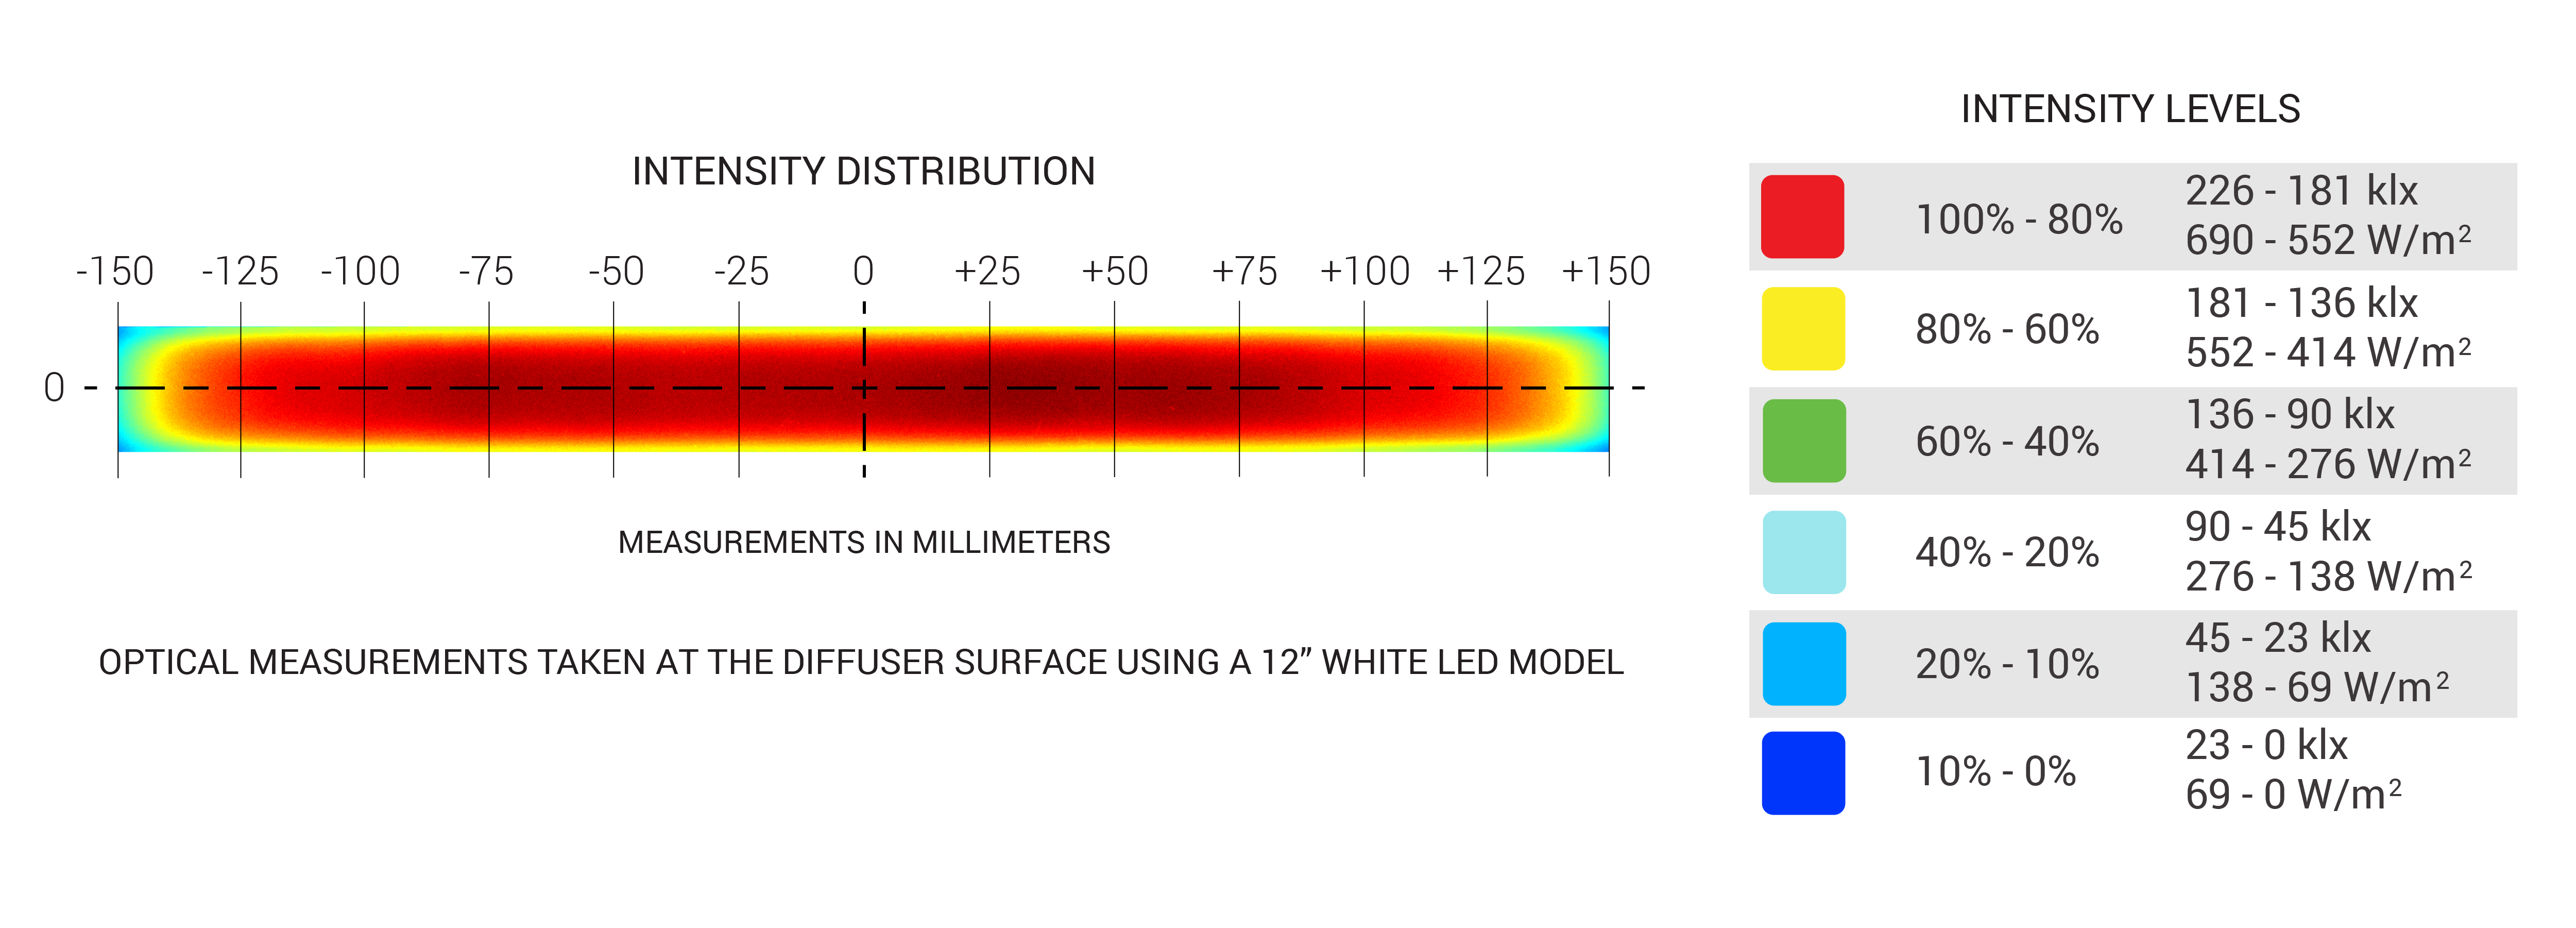 Intensity Distribution Levels BL313 1